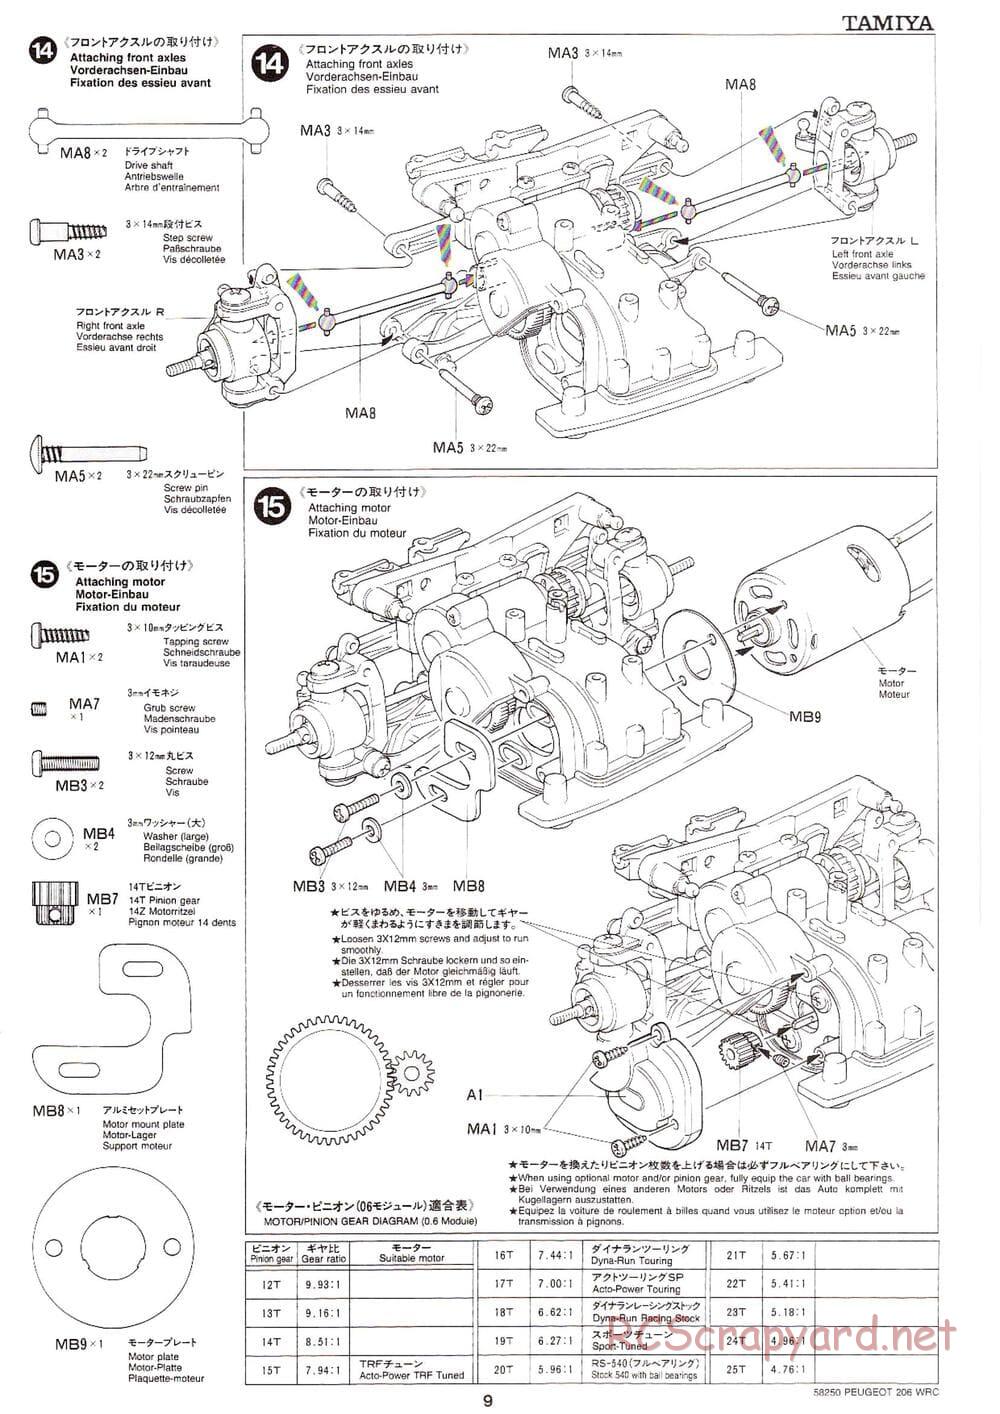 Tamiya - Peugeot 206 WRC - TA-03FS Chassis - Manual - Page 9